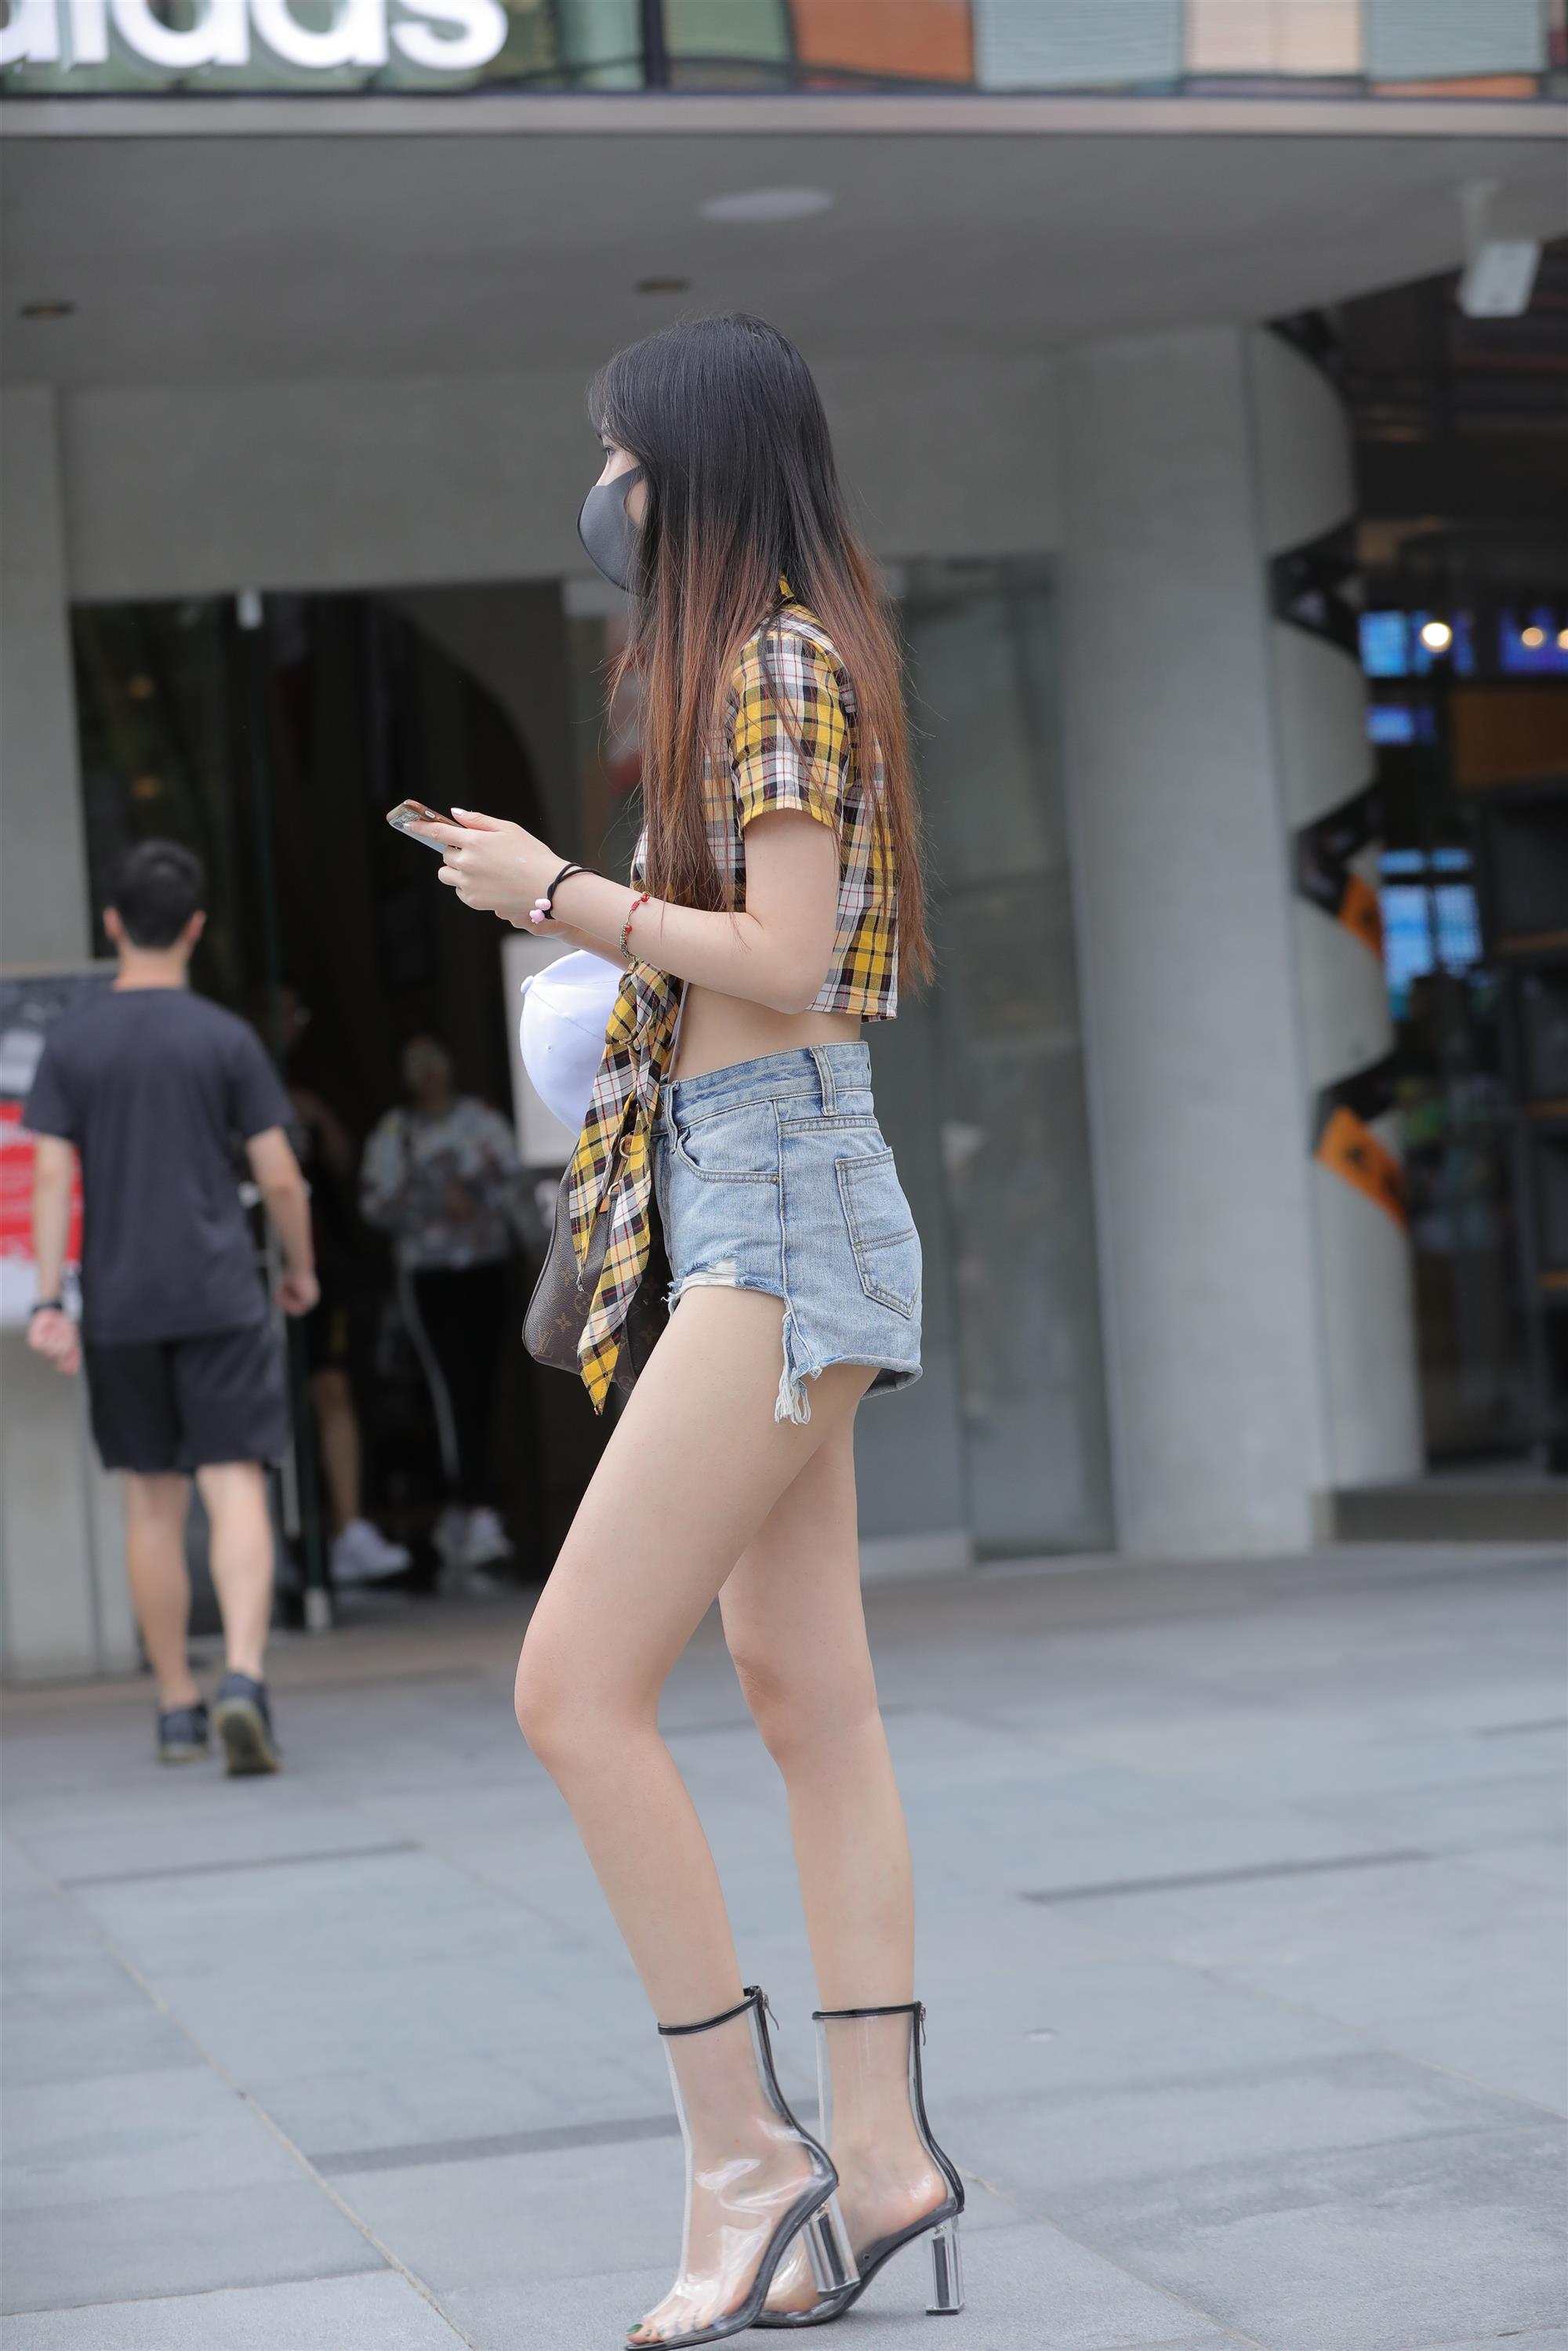 Street Denim shorts and high heels - 52.jpg